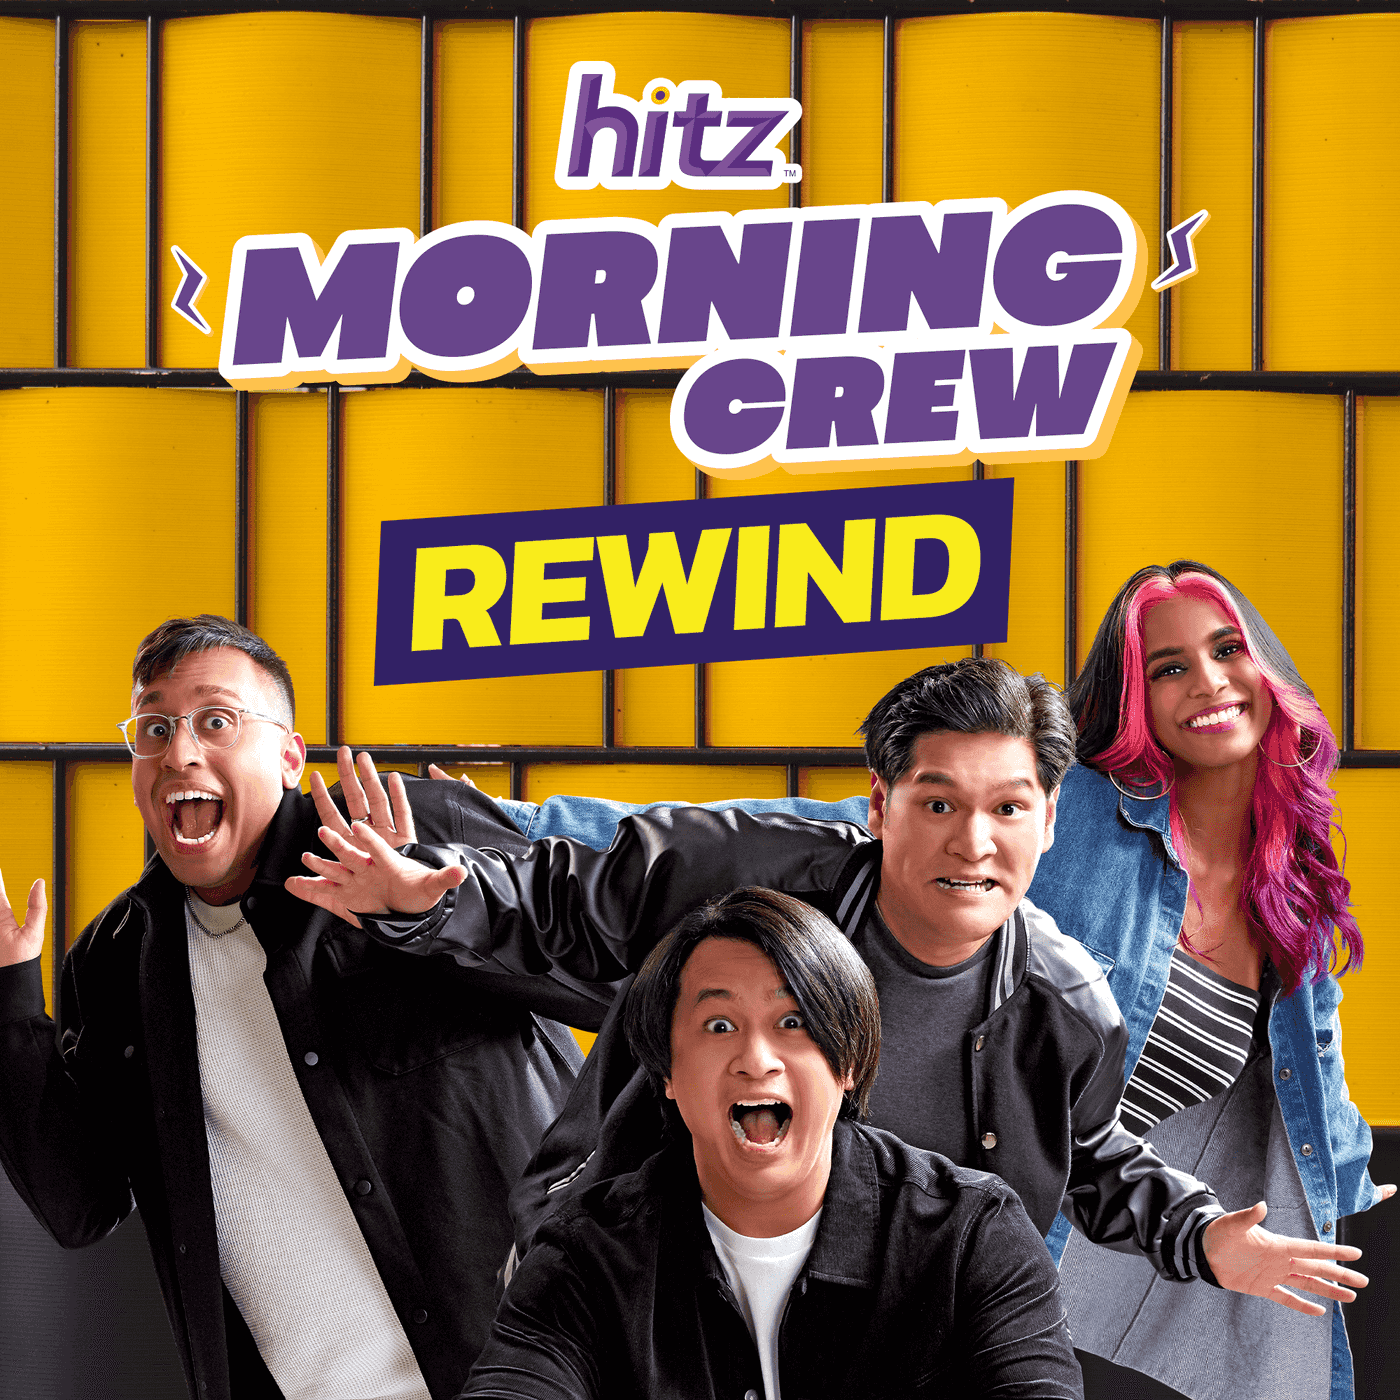 HITZ Morning Crew Rewinds!